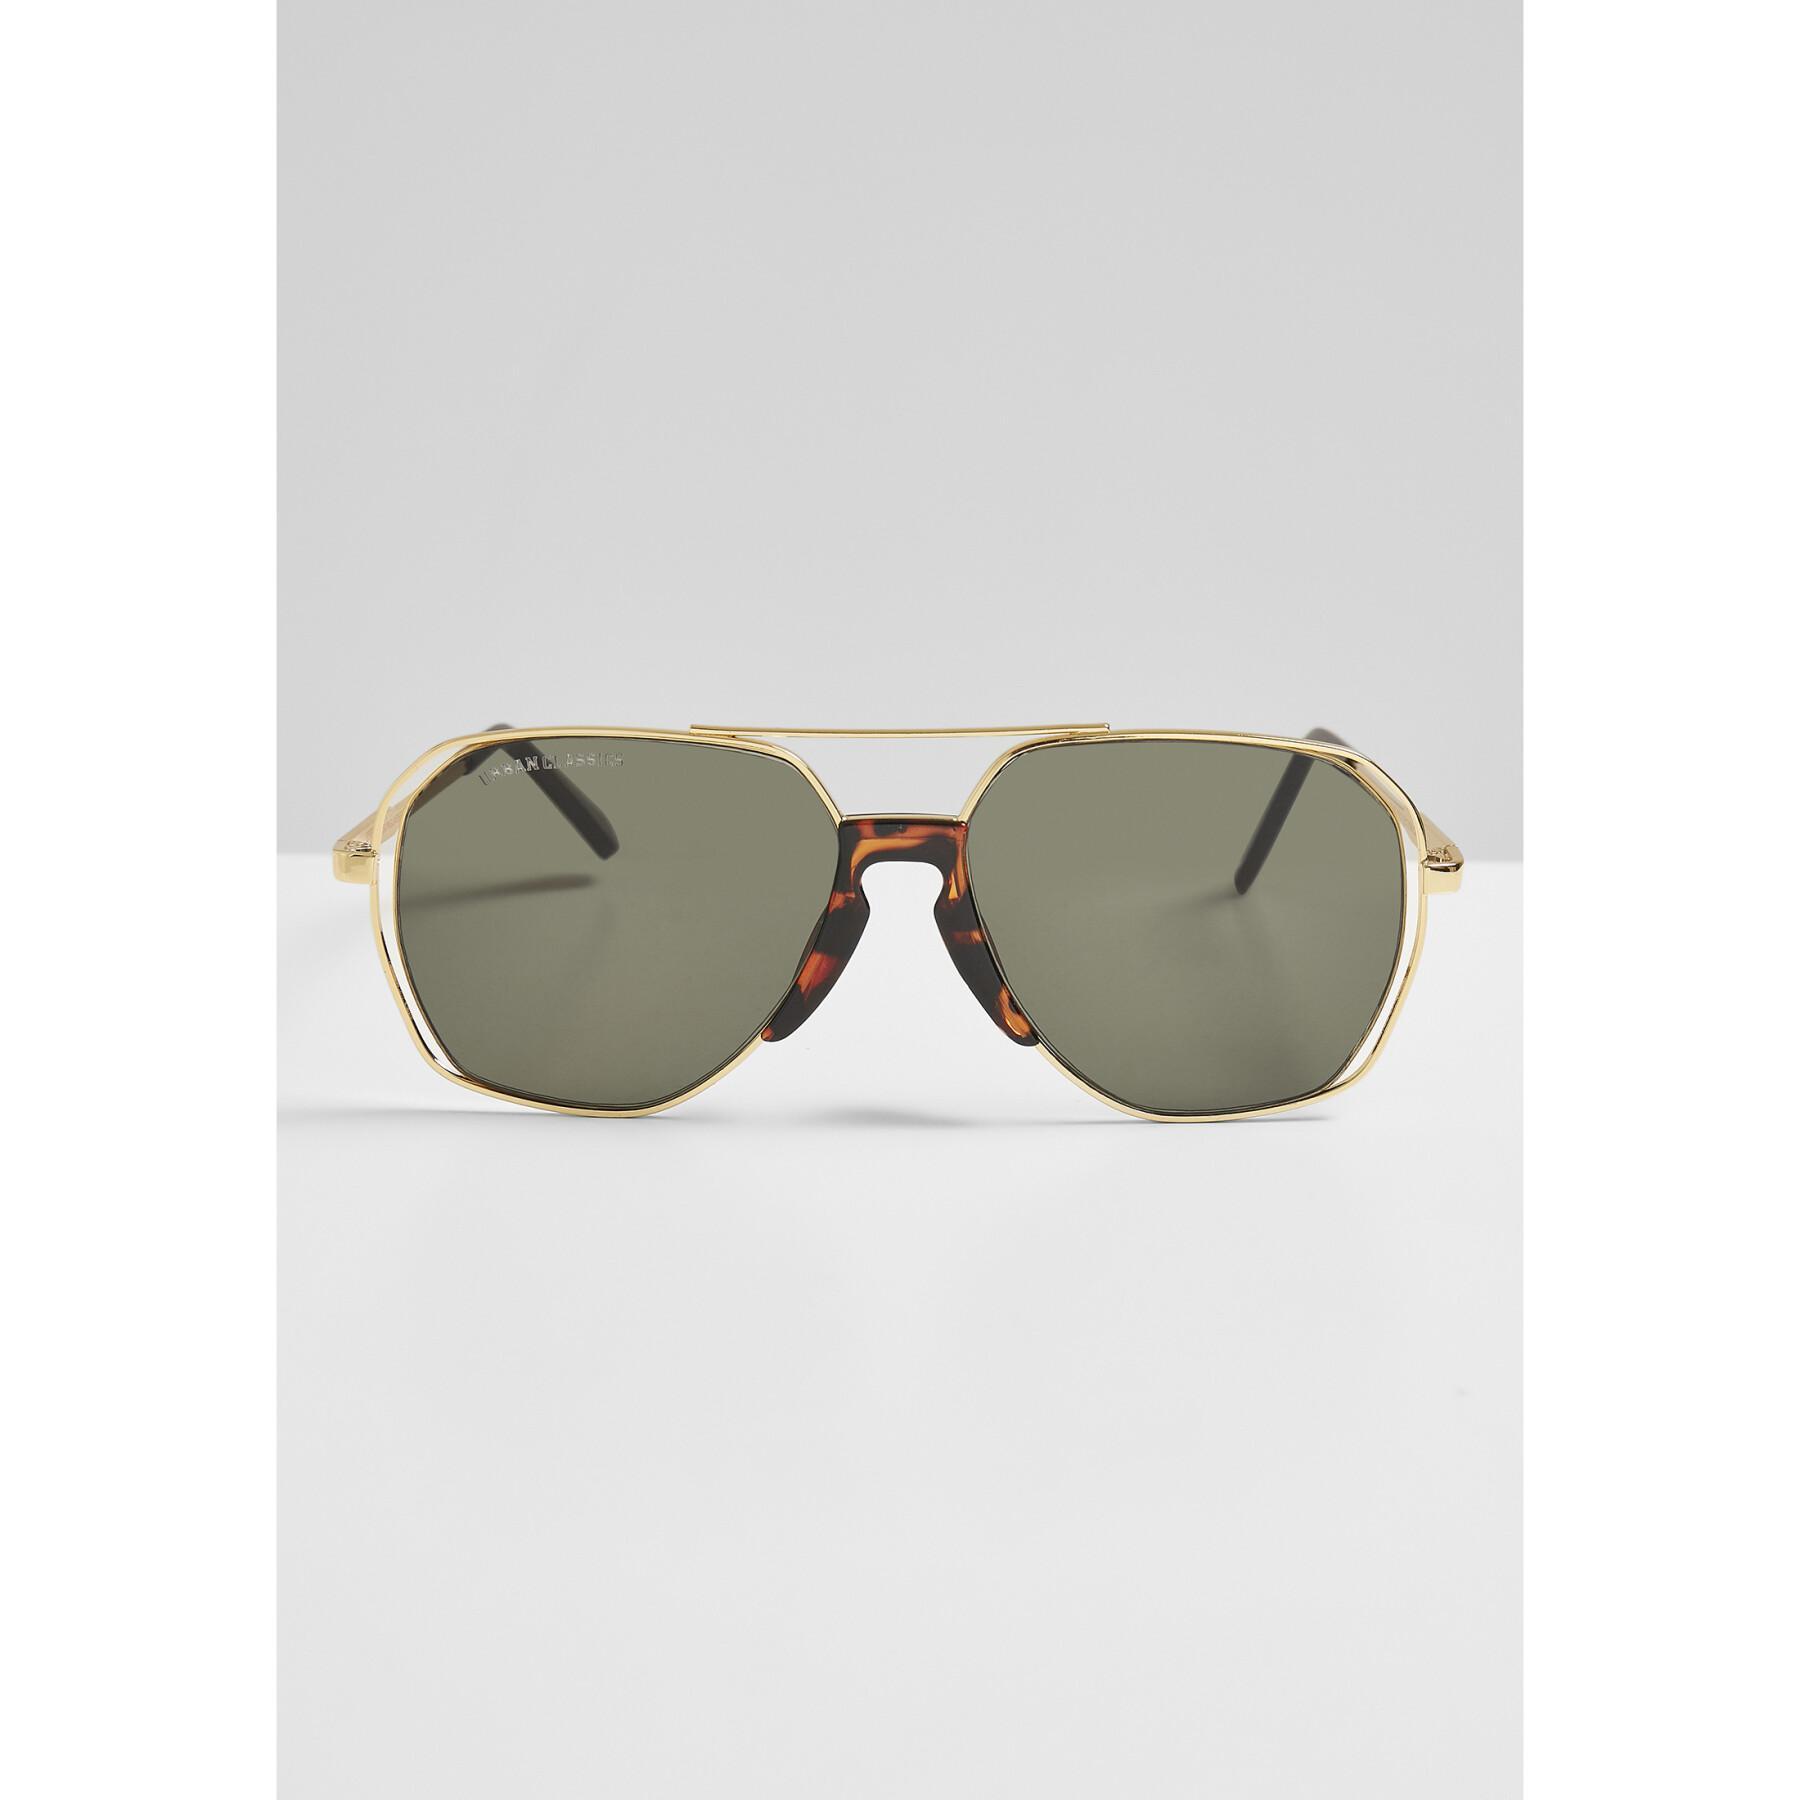 Sunglasses with - Fashion chain Accessories - Sunglasses karphatos Classics - Urban Accessories